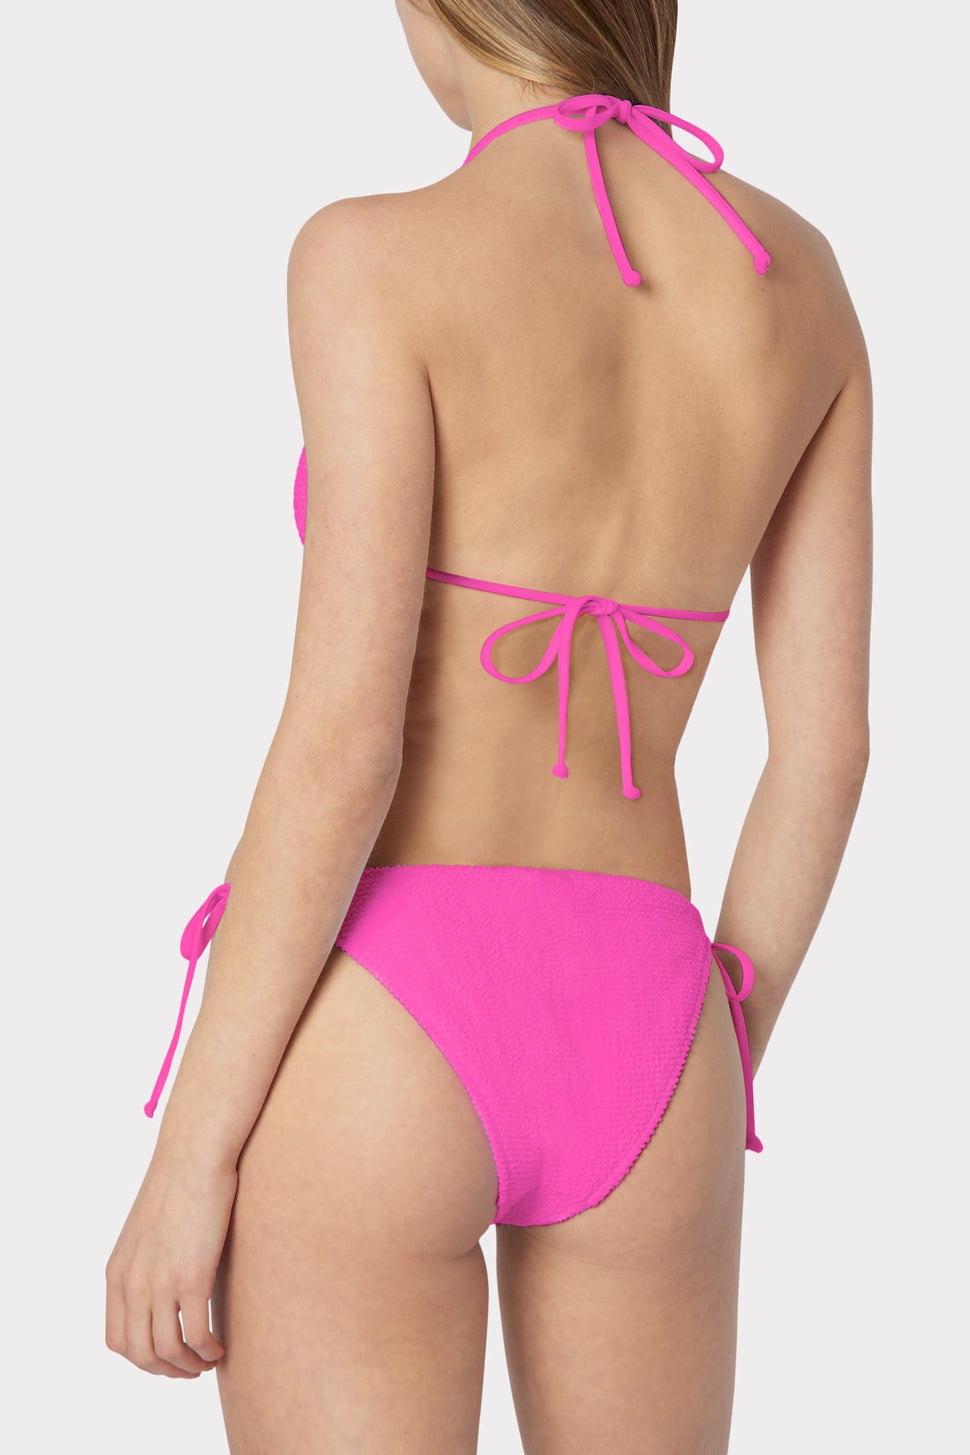 Milly Cabana Millie String Bikini Top